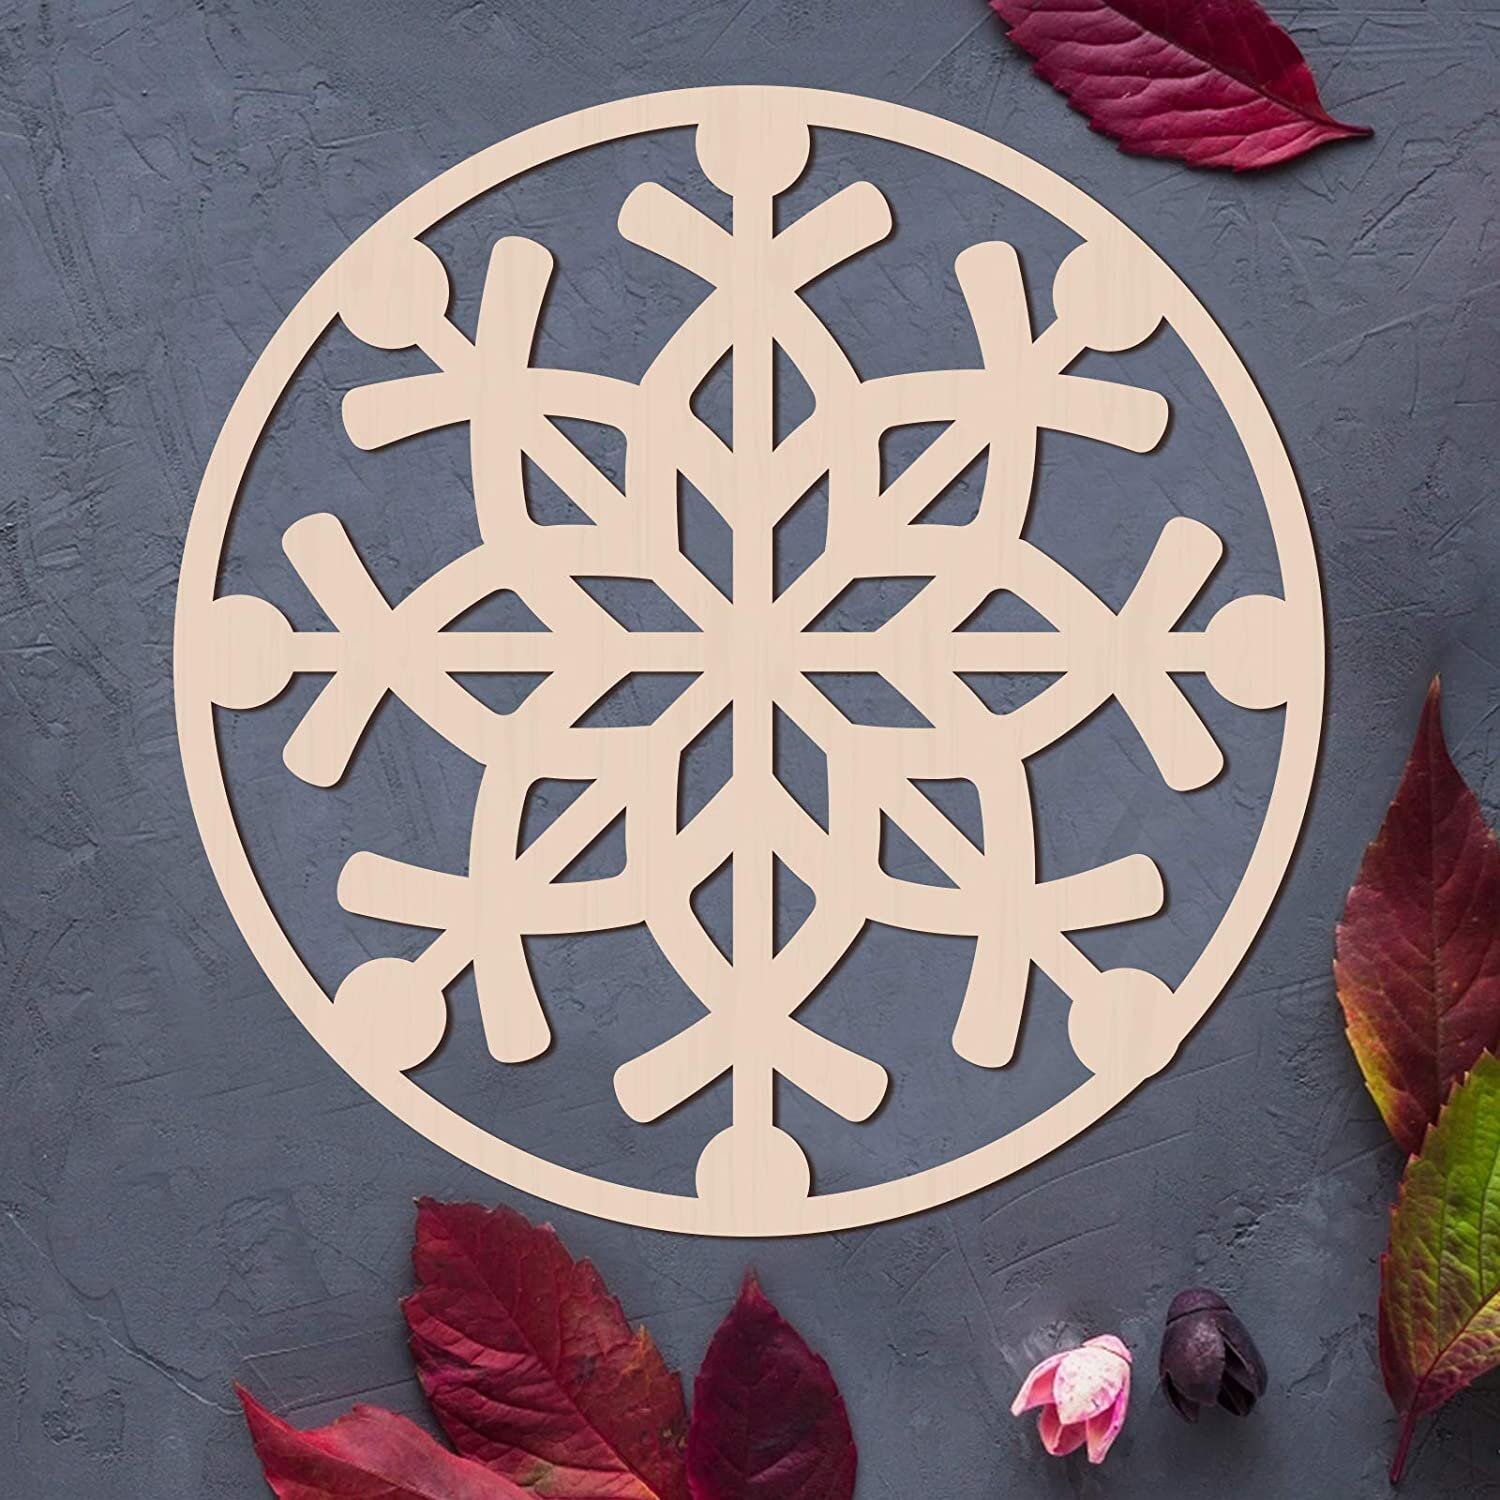 Wooden Christmas Geometric Set of 4 Snowflakes Wall Decor Wood Wall Art Home Decor Figure Ornament Hanging Gift